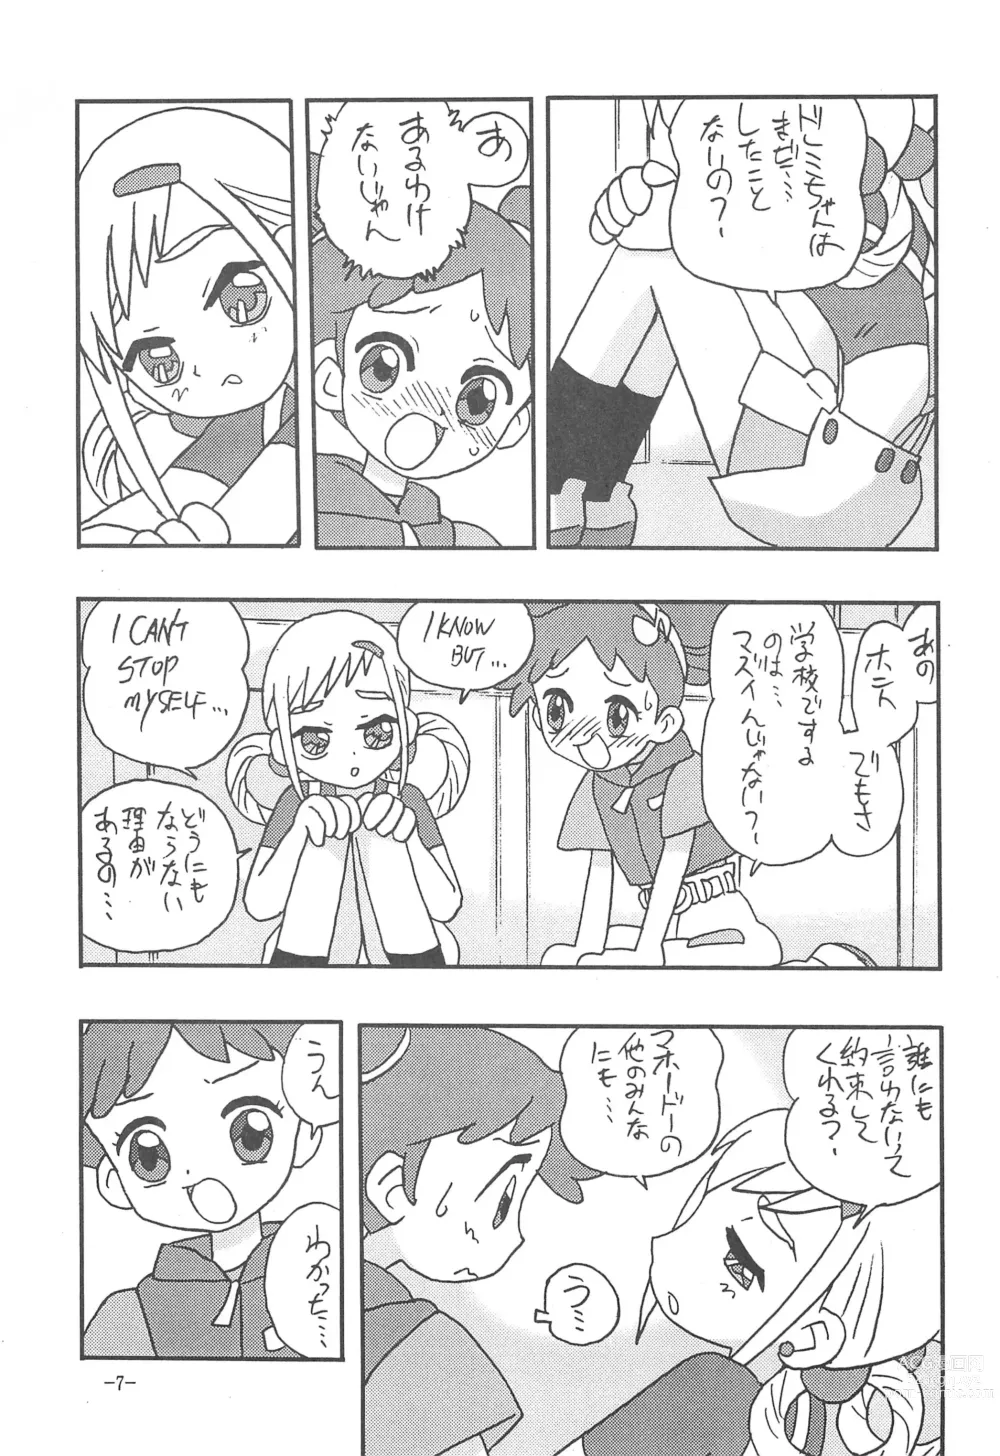 Page 7 of doujinshi CAN YOU KEEP A SECRET?